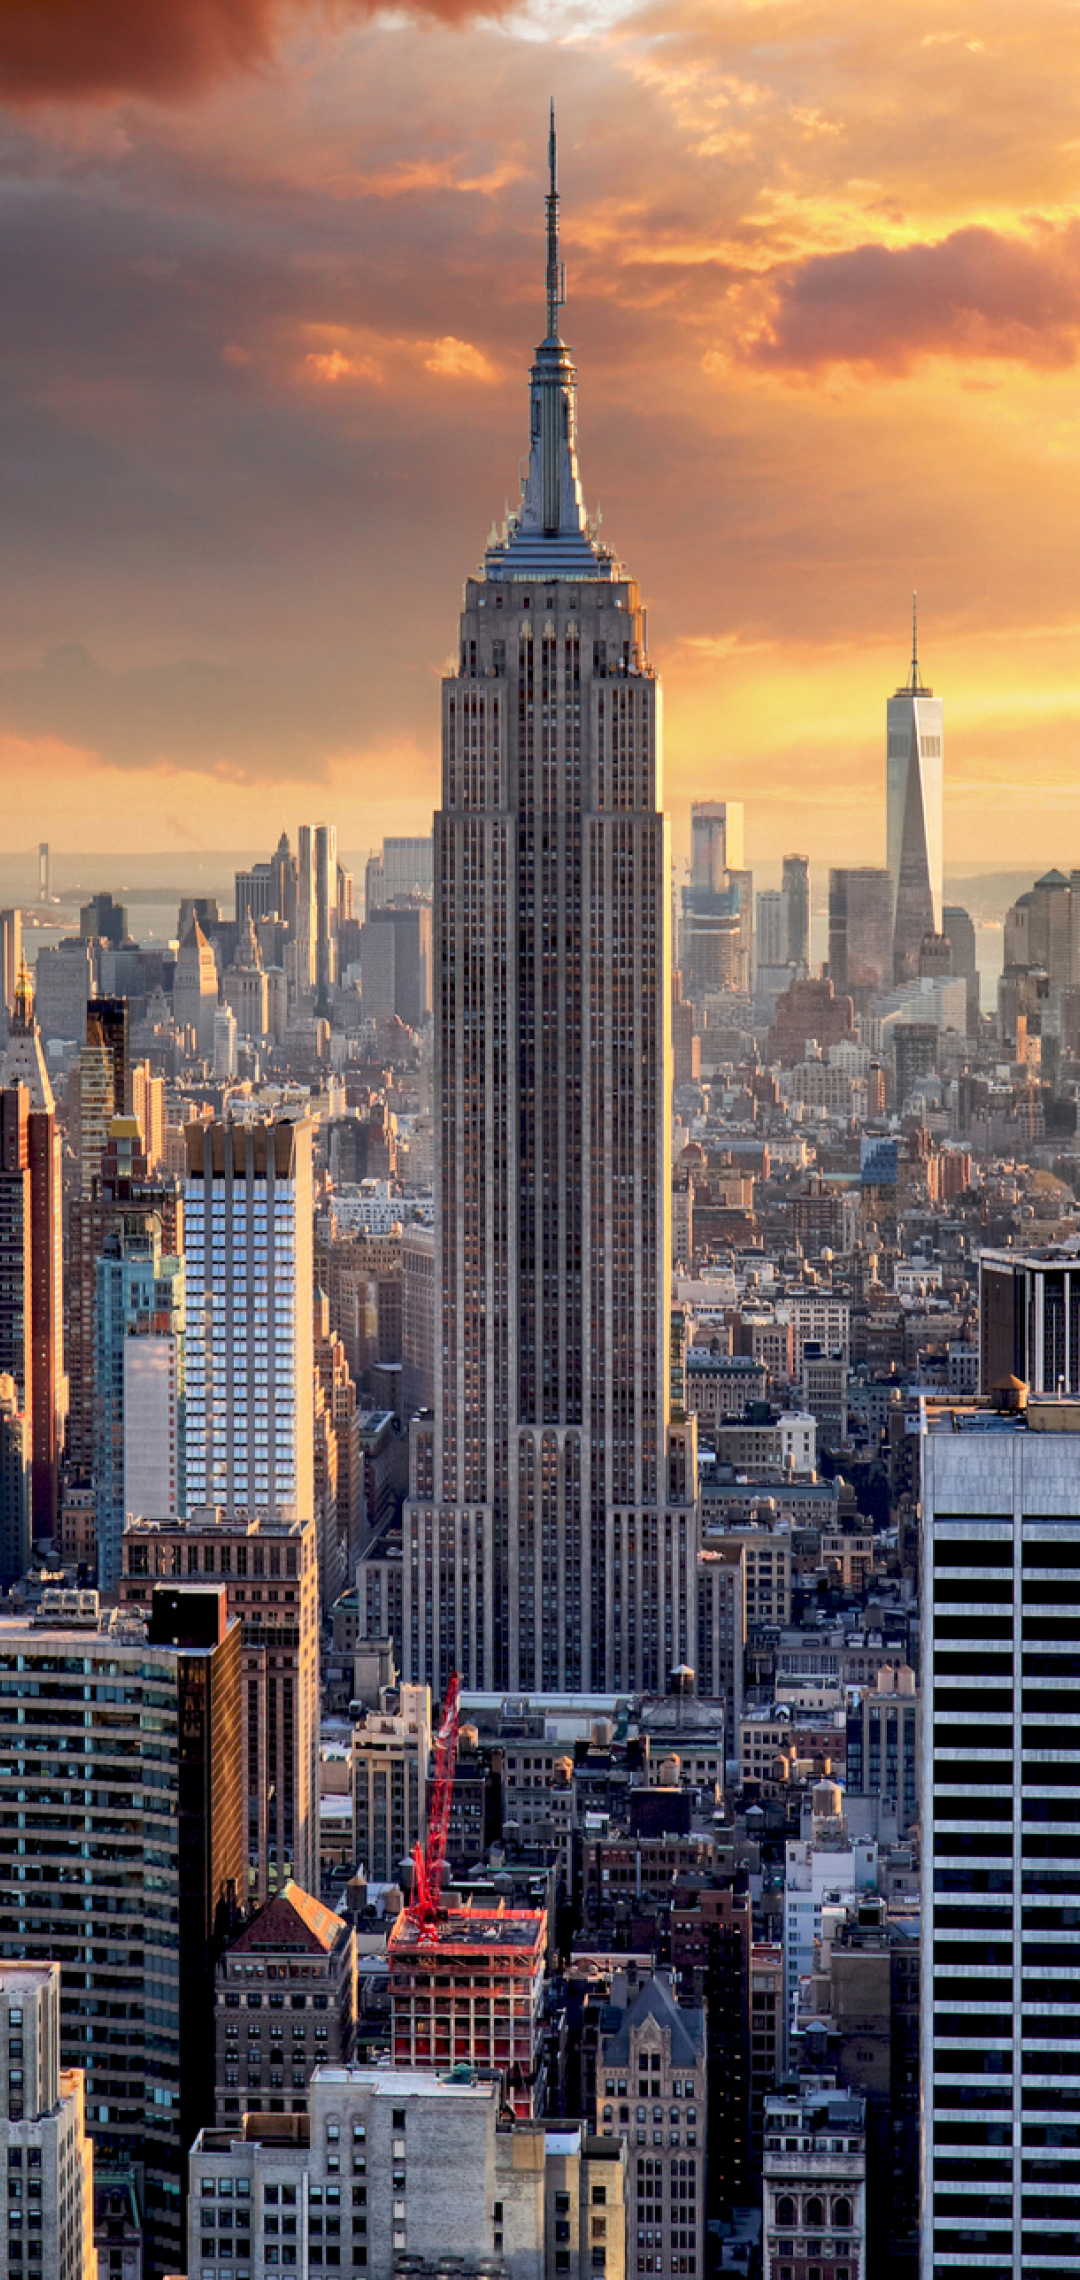 Photographing the New York skyline